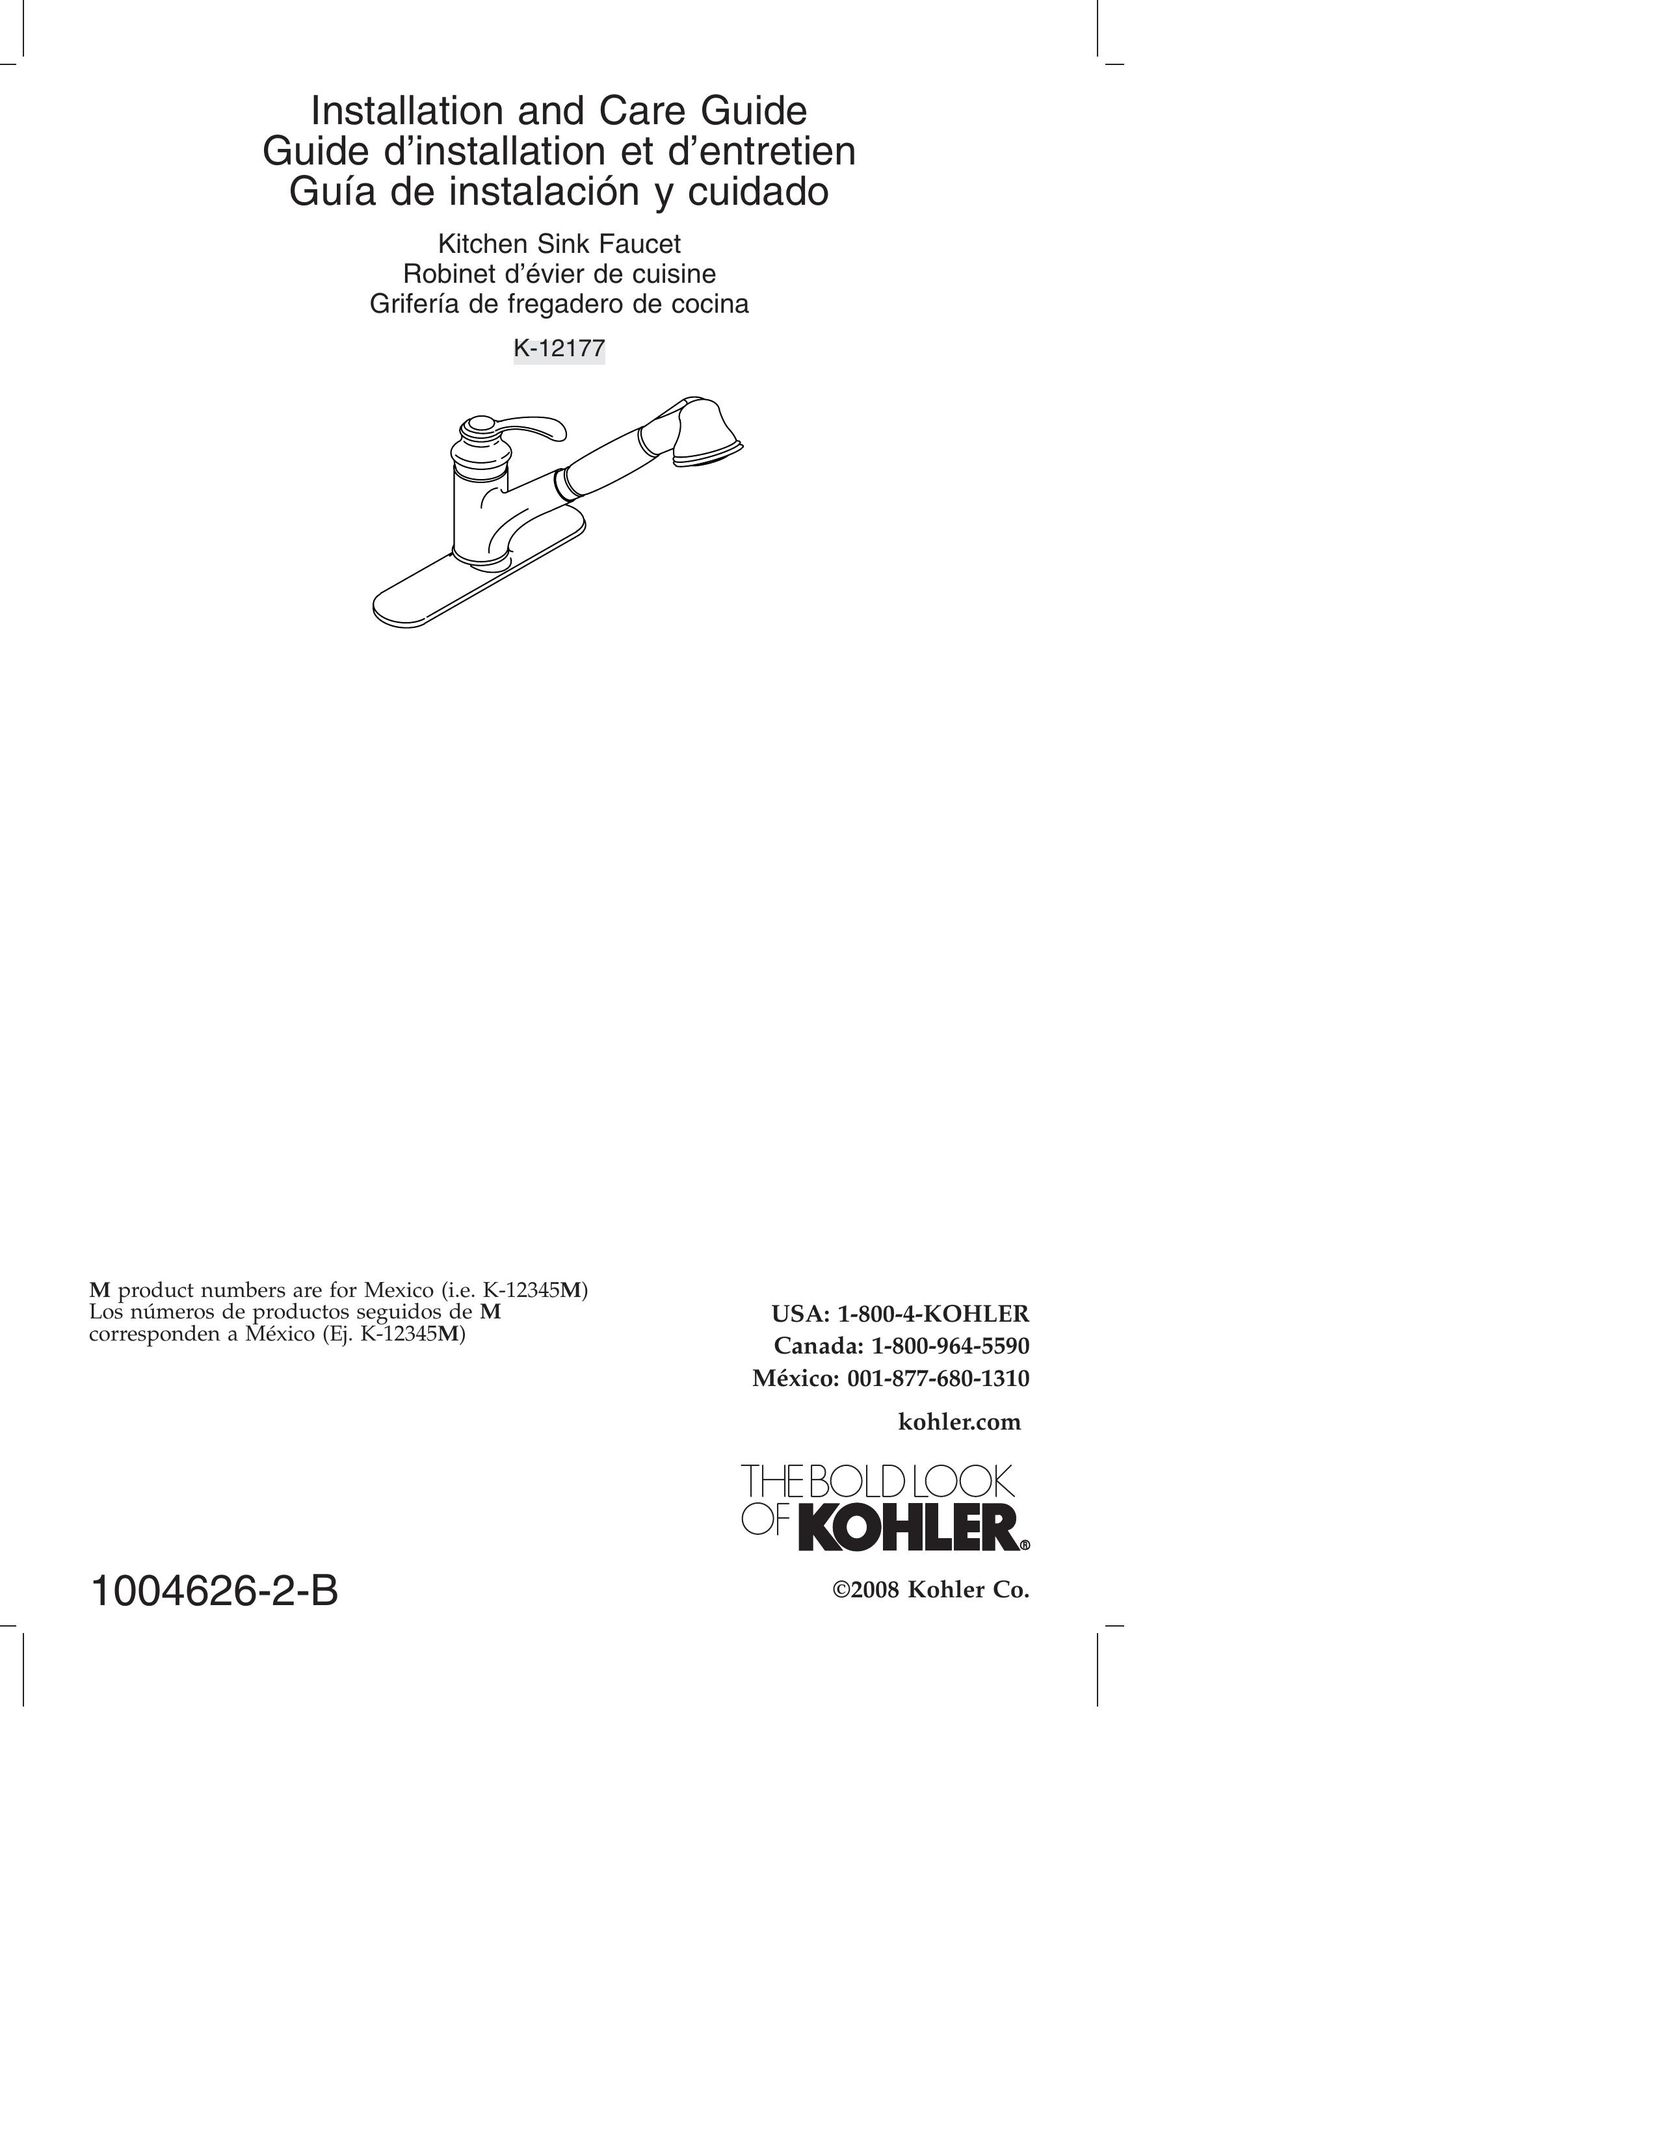 Kohler K-12177 Plumbing Product User Manual